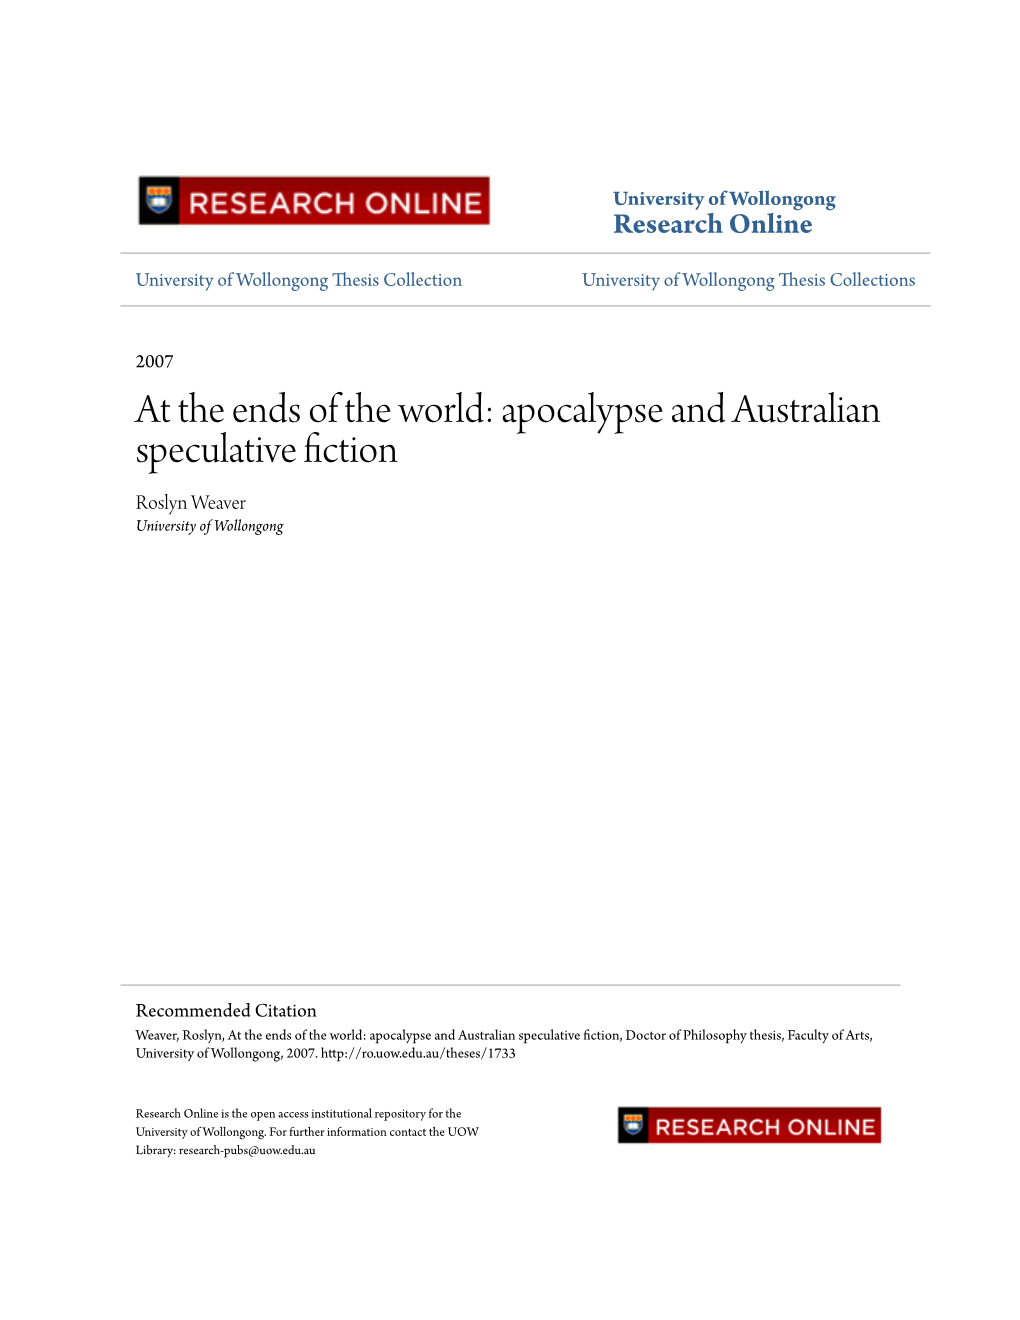 Apocalypse and Australian Speculative Fiction Roslyn Weaver University of Wollongong